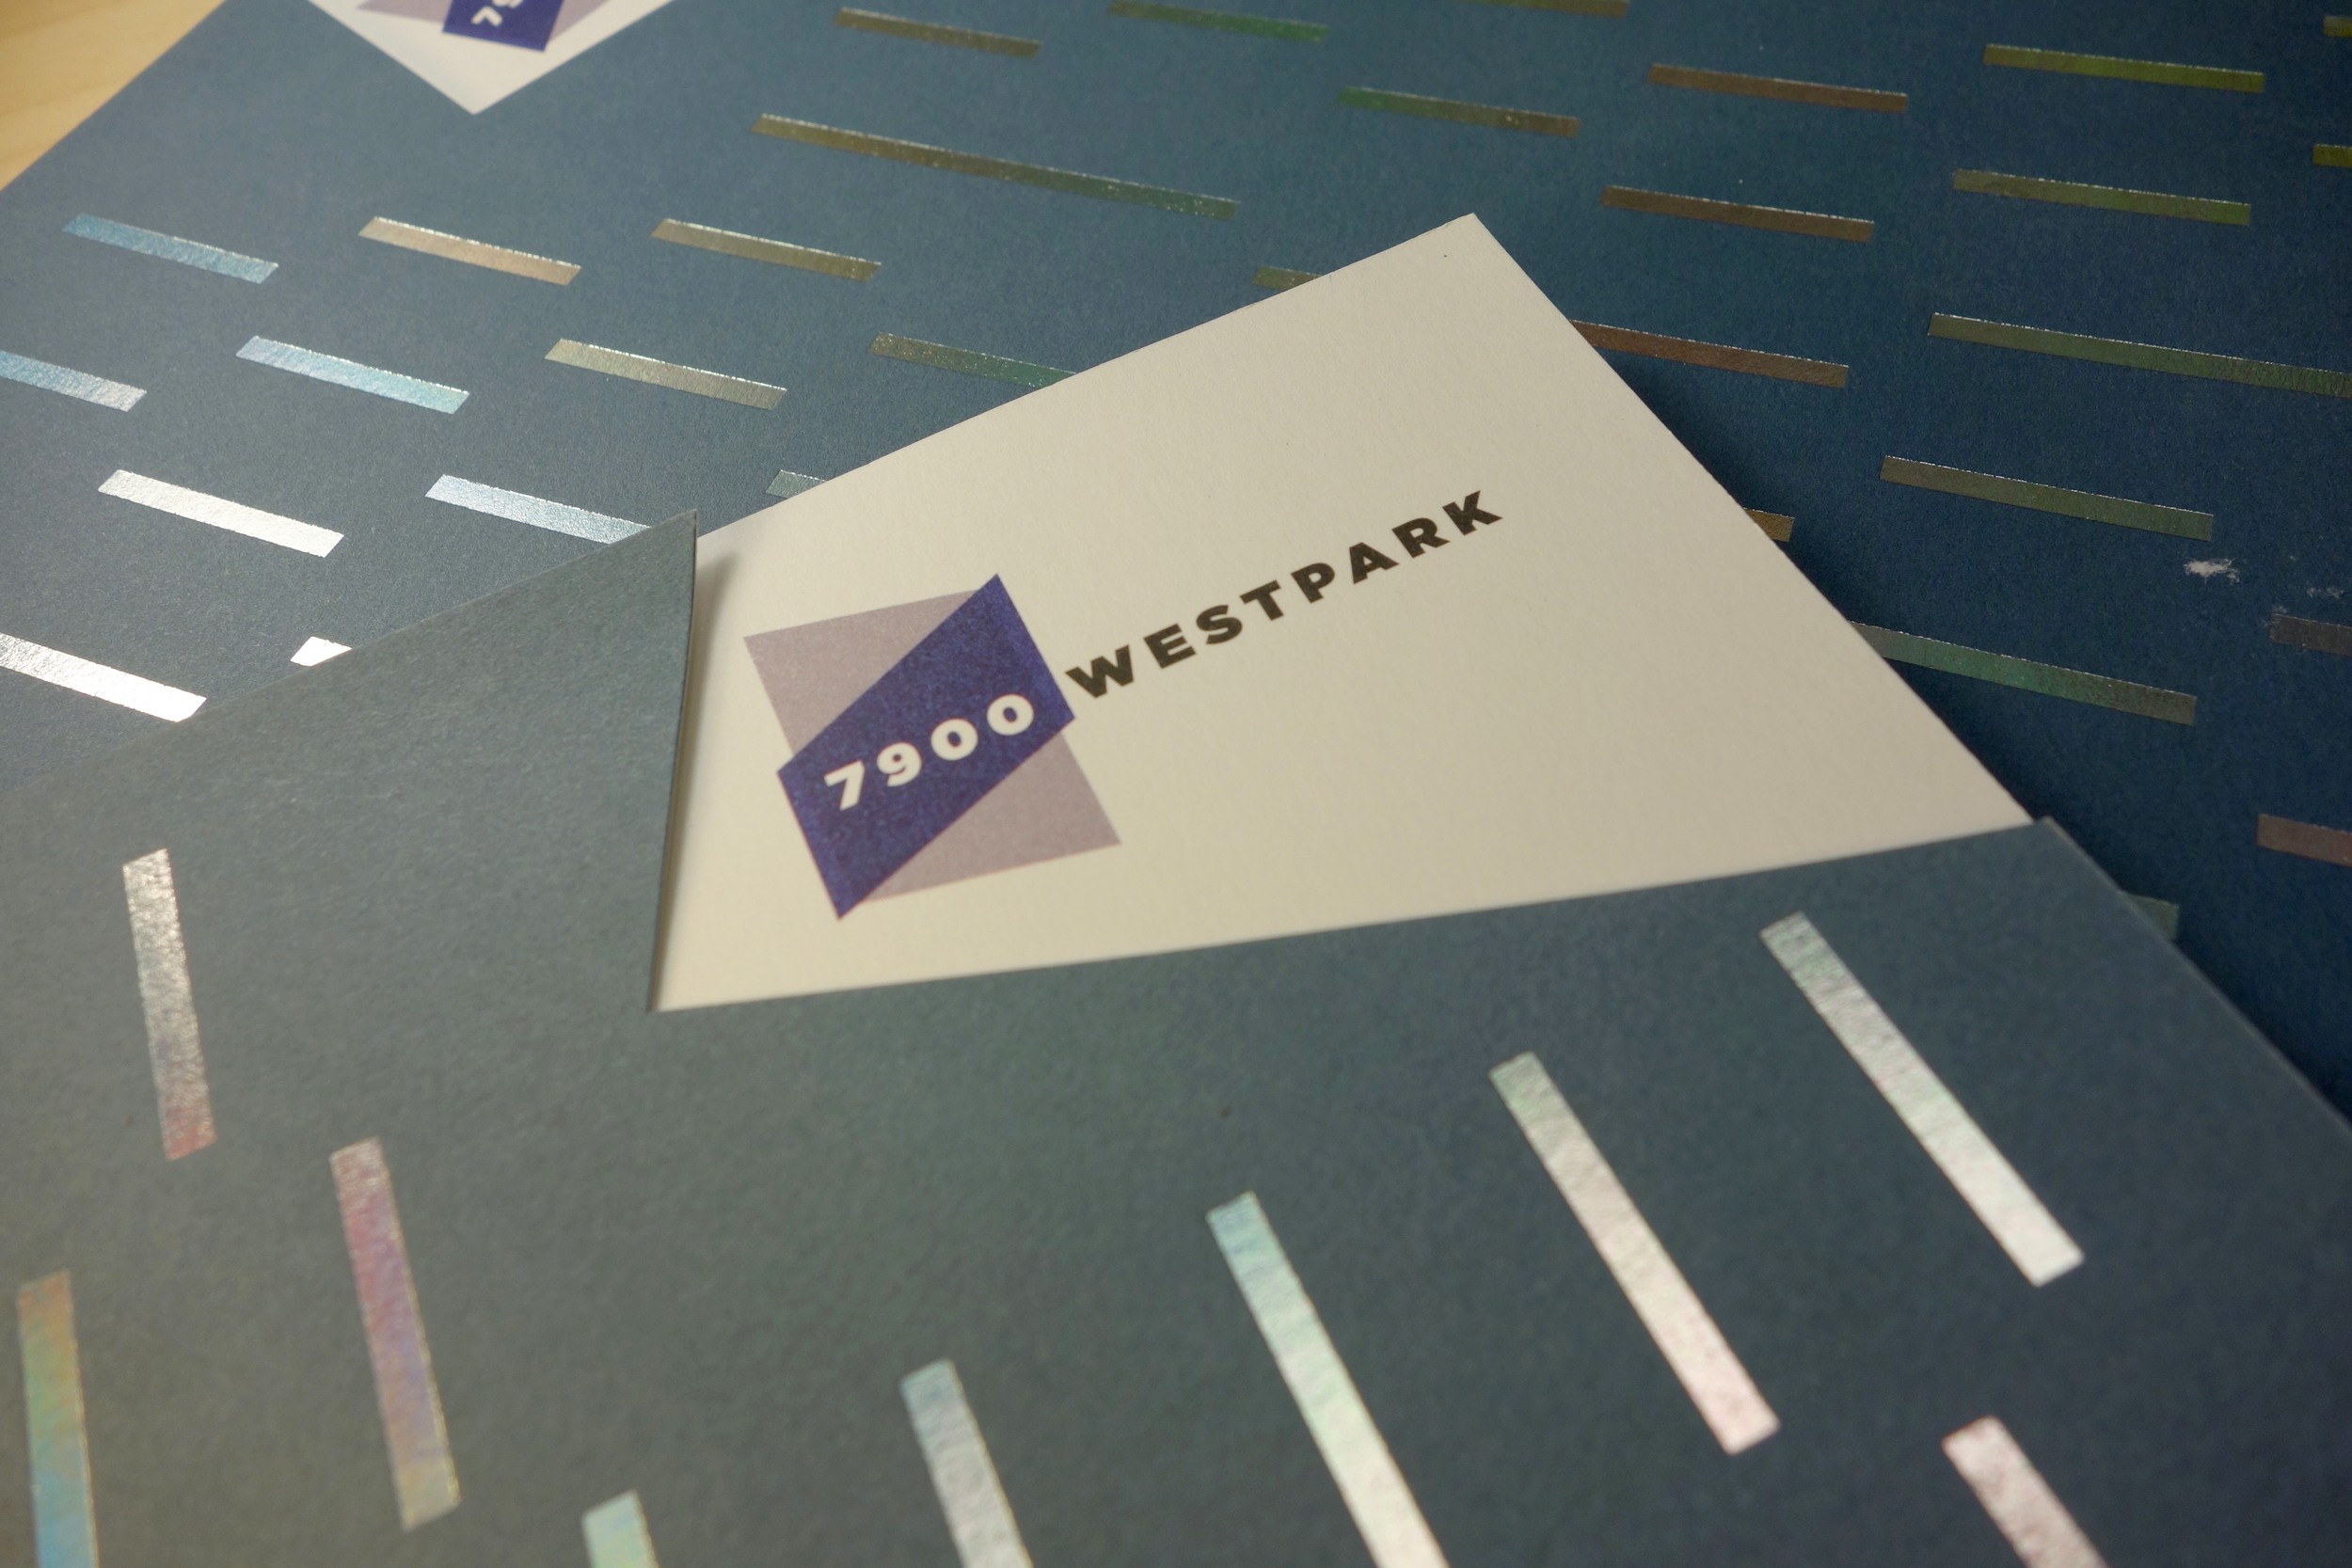 7900 Westpark Brochure & Branding